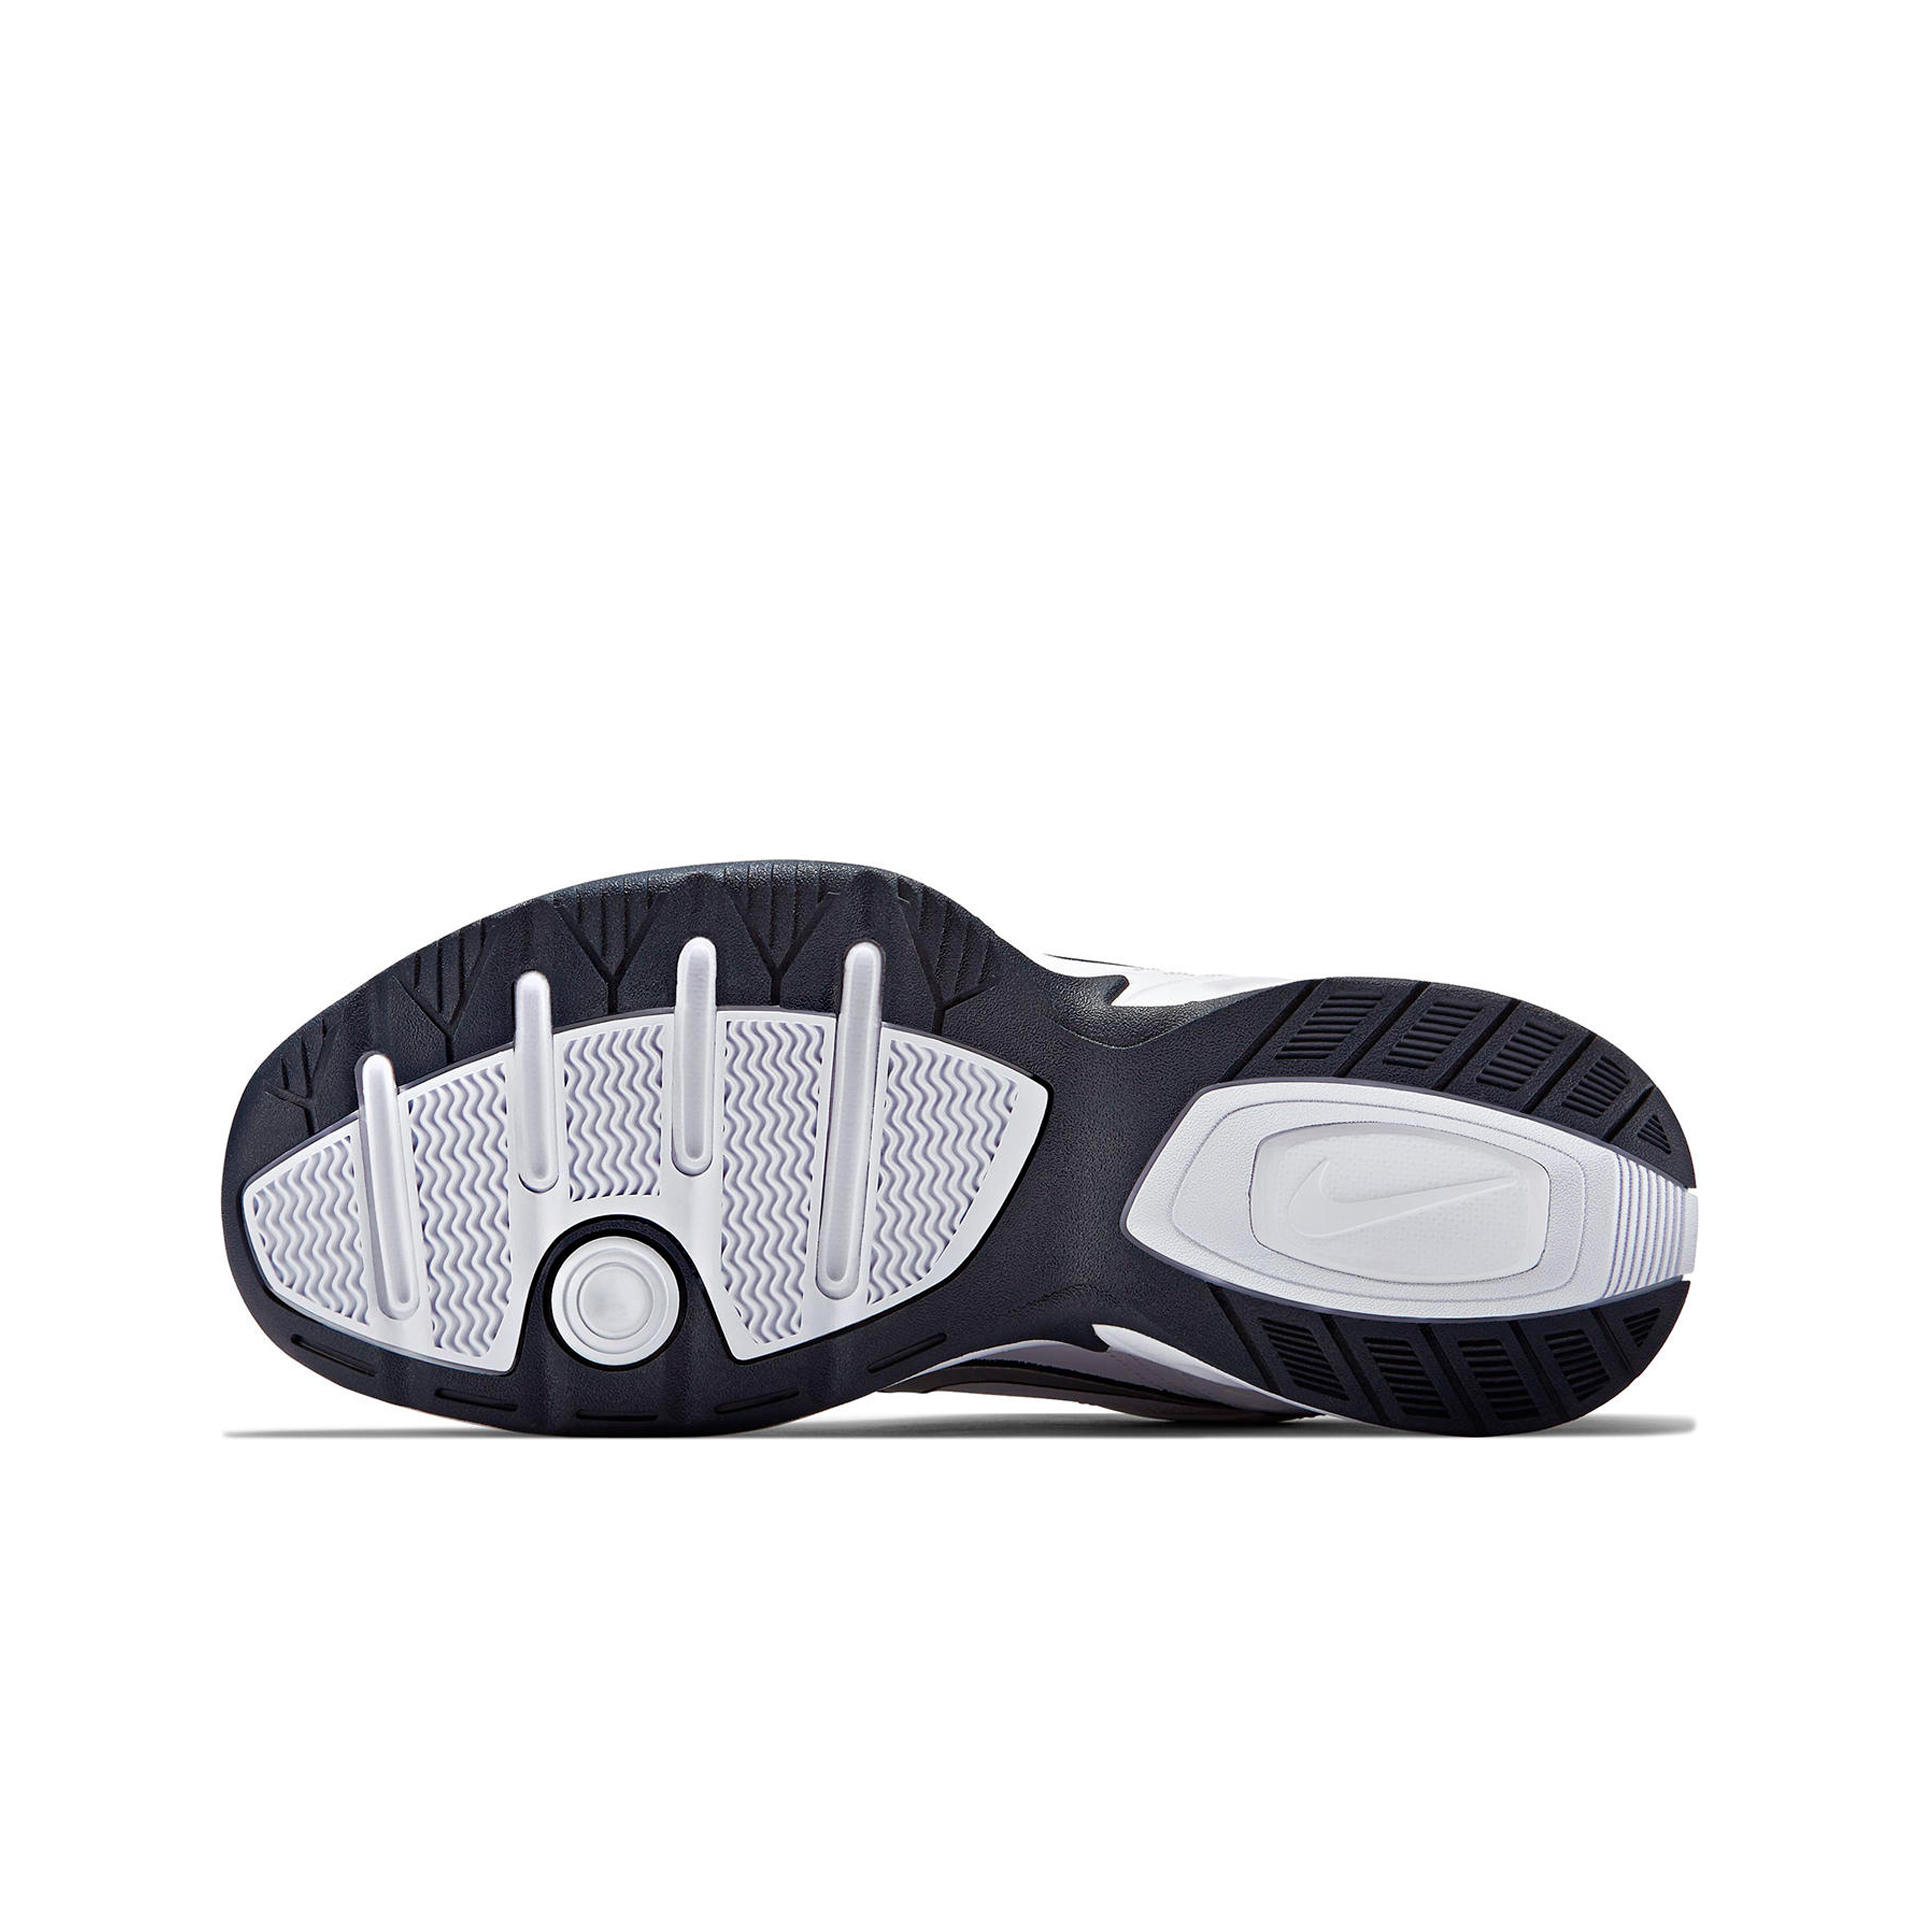 Aclarar Susceptibles a Dolor Nike Nike Air Monarch Iv blanco zapatillas running hombre | Dooers Sneakers